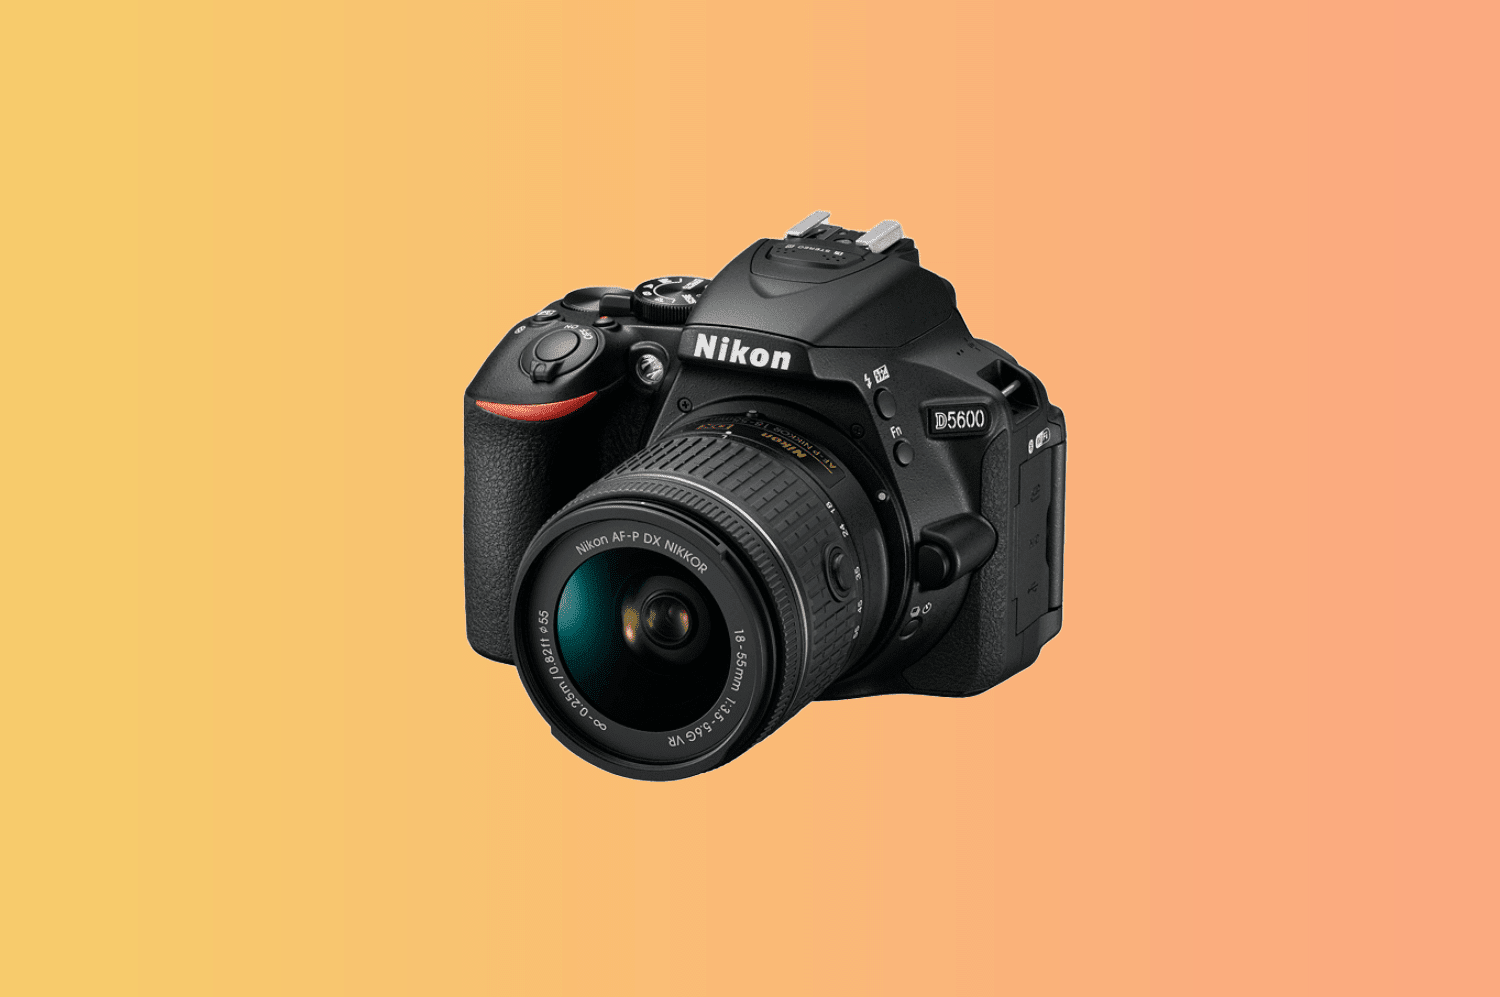 Does Nikon D5600 have Flash?